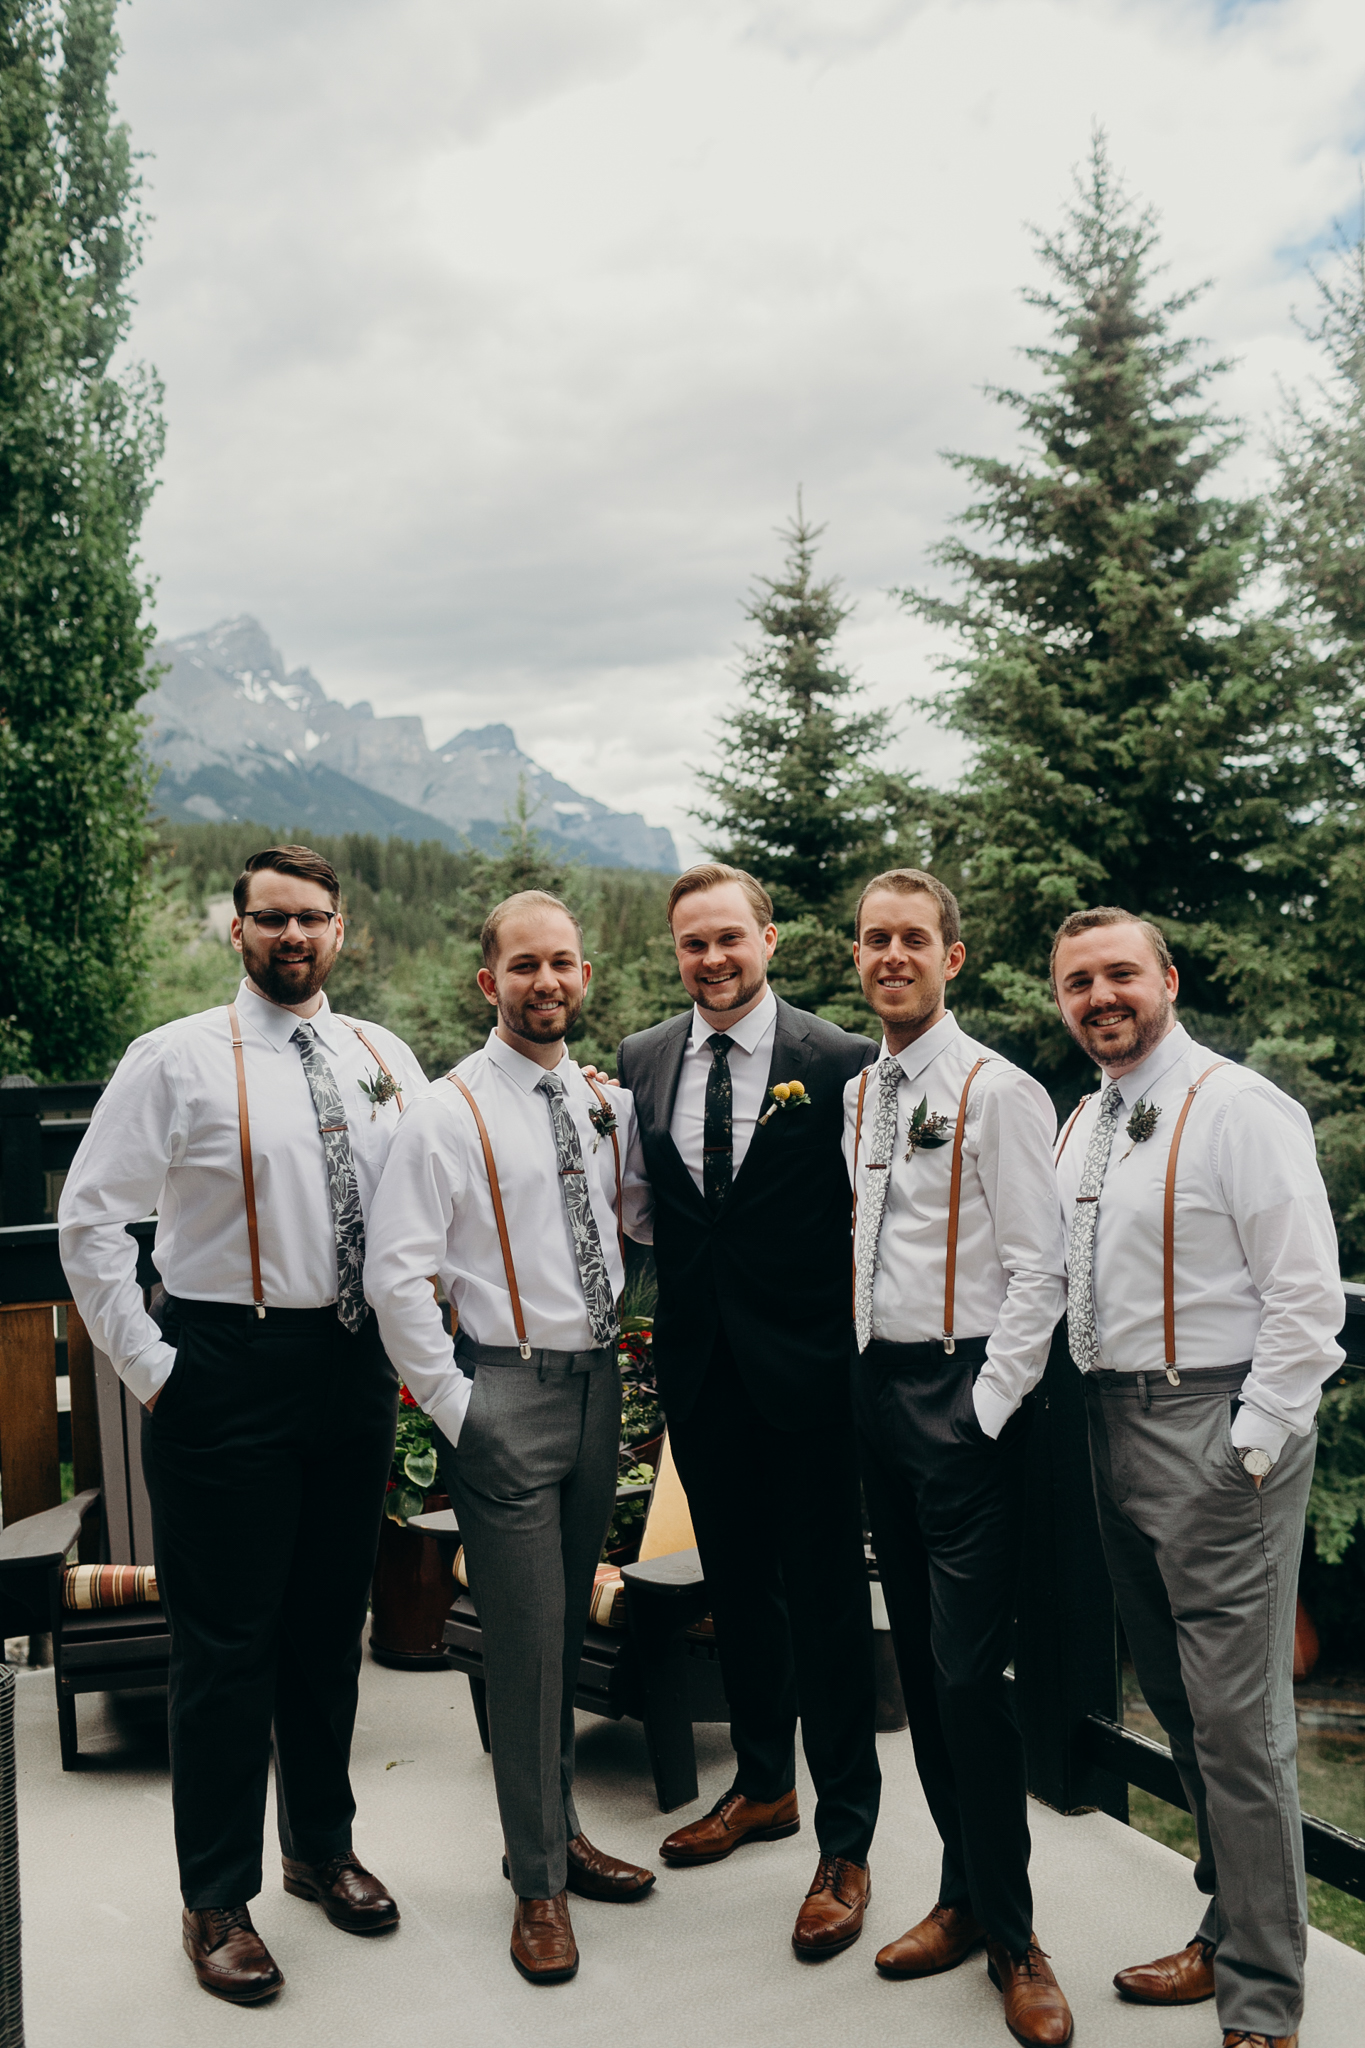 Groom and groomsmen portrait smiling destination wedding photographer Canmore Banff